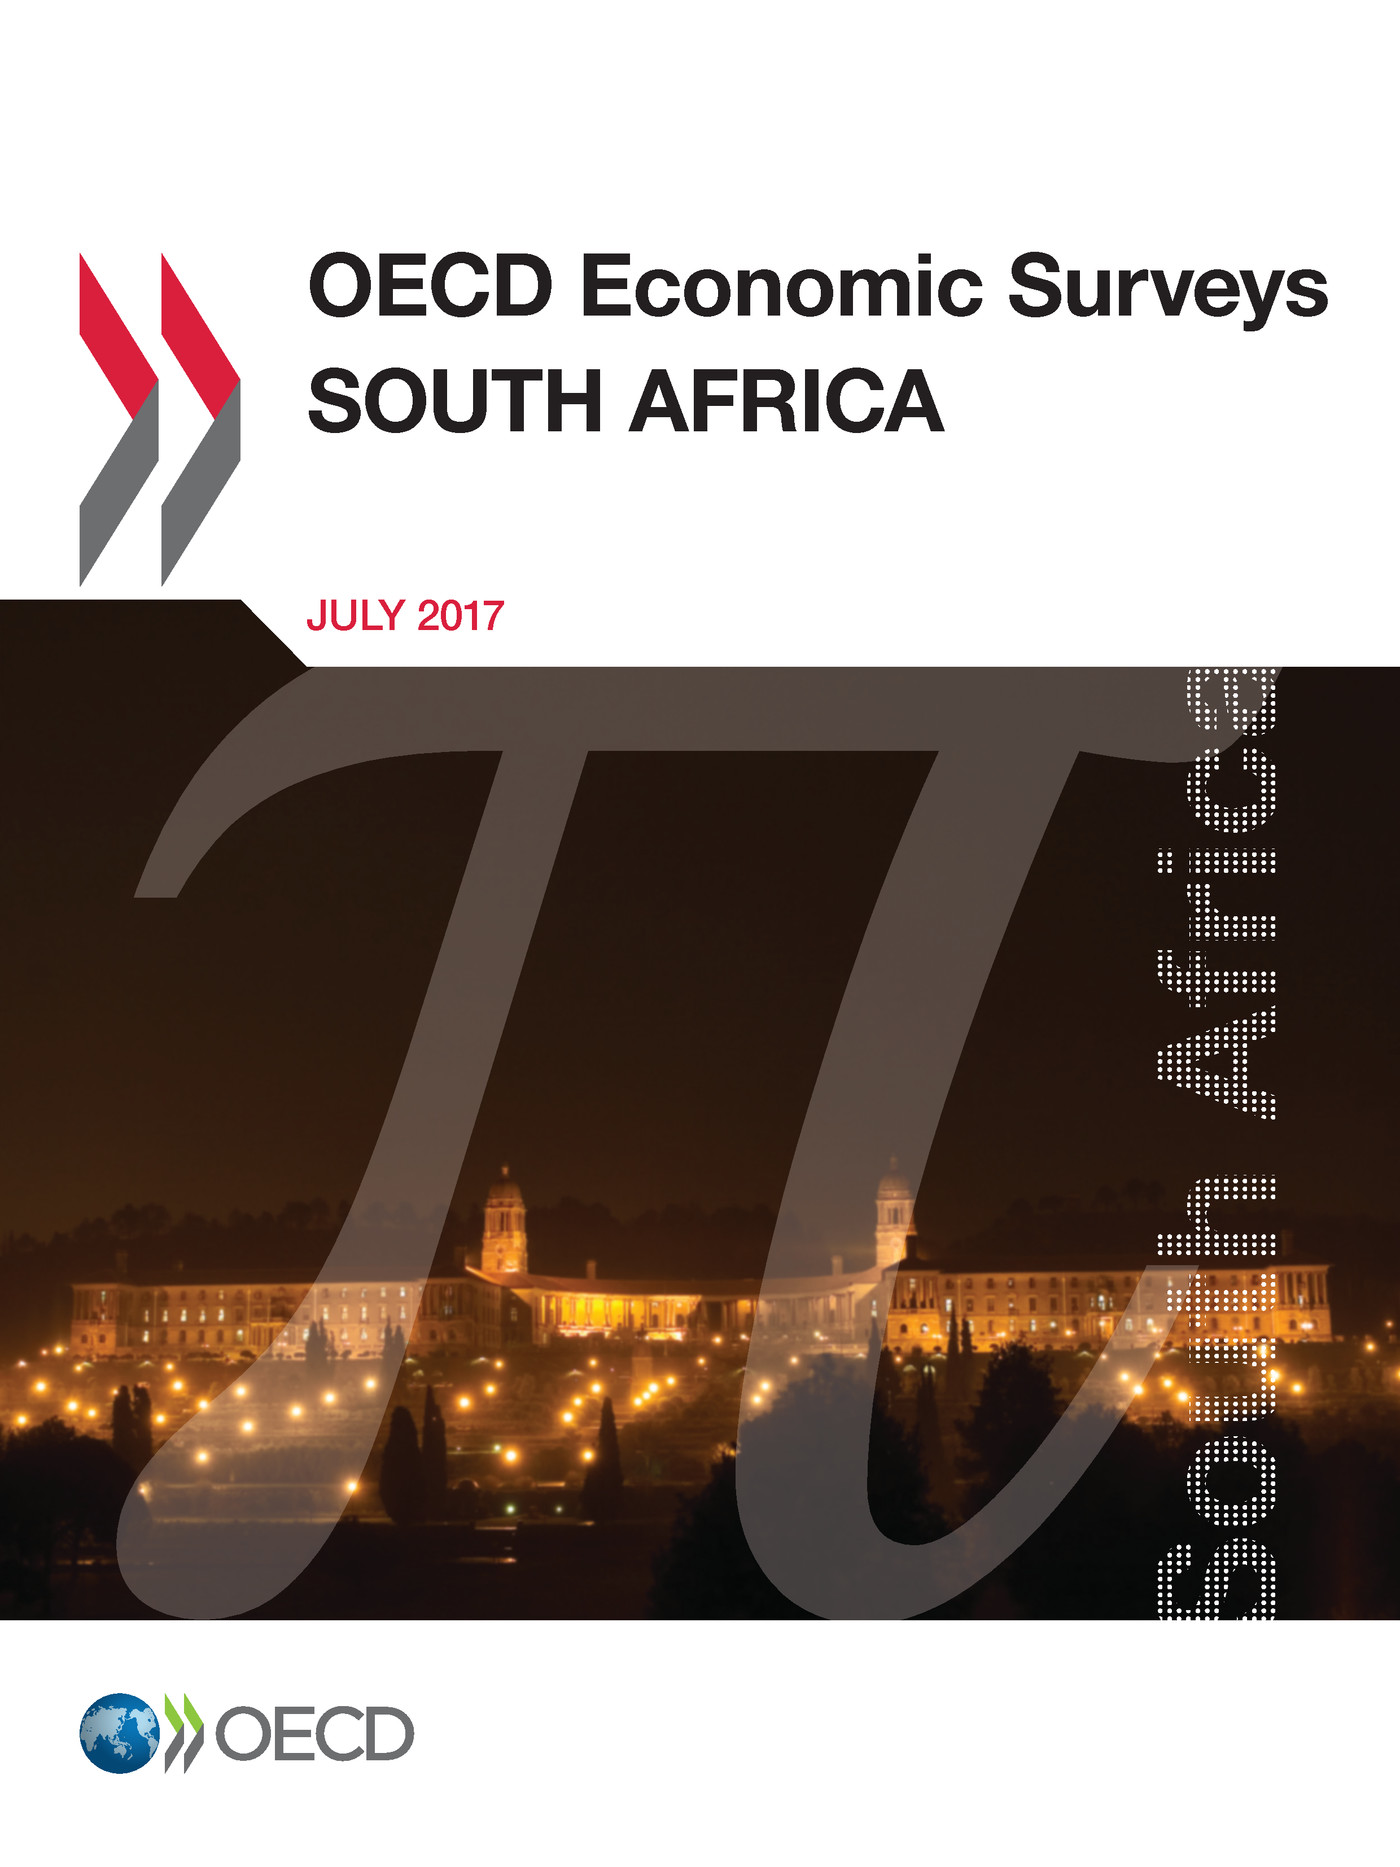 OECD Economic Surveys: South Africa 2017 -  Collectif - OCDE / OECD